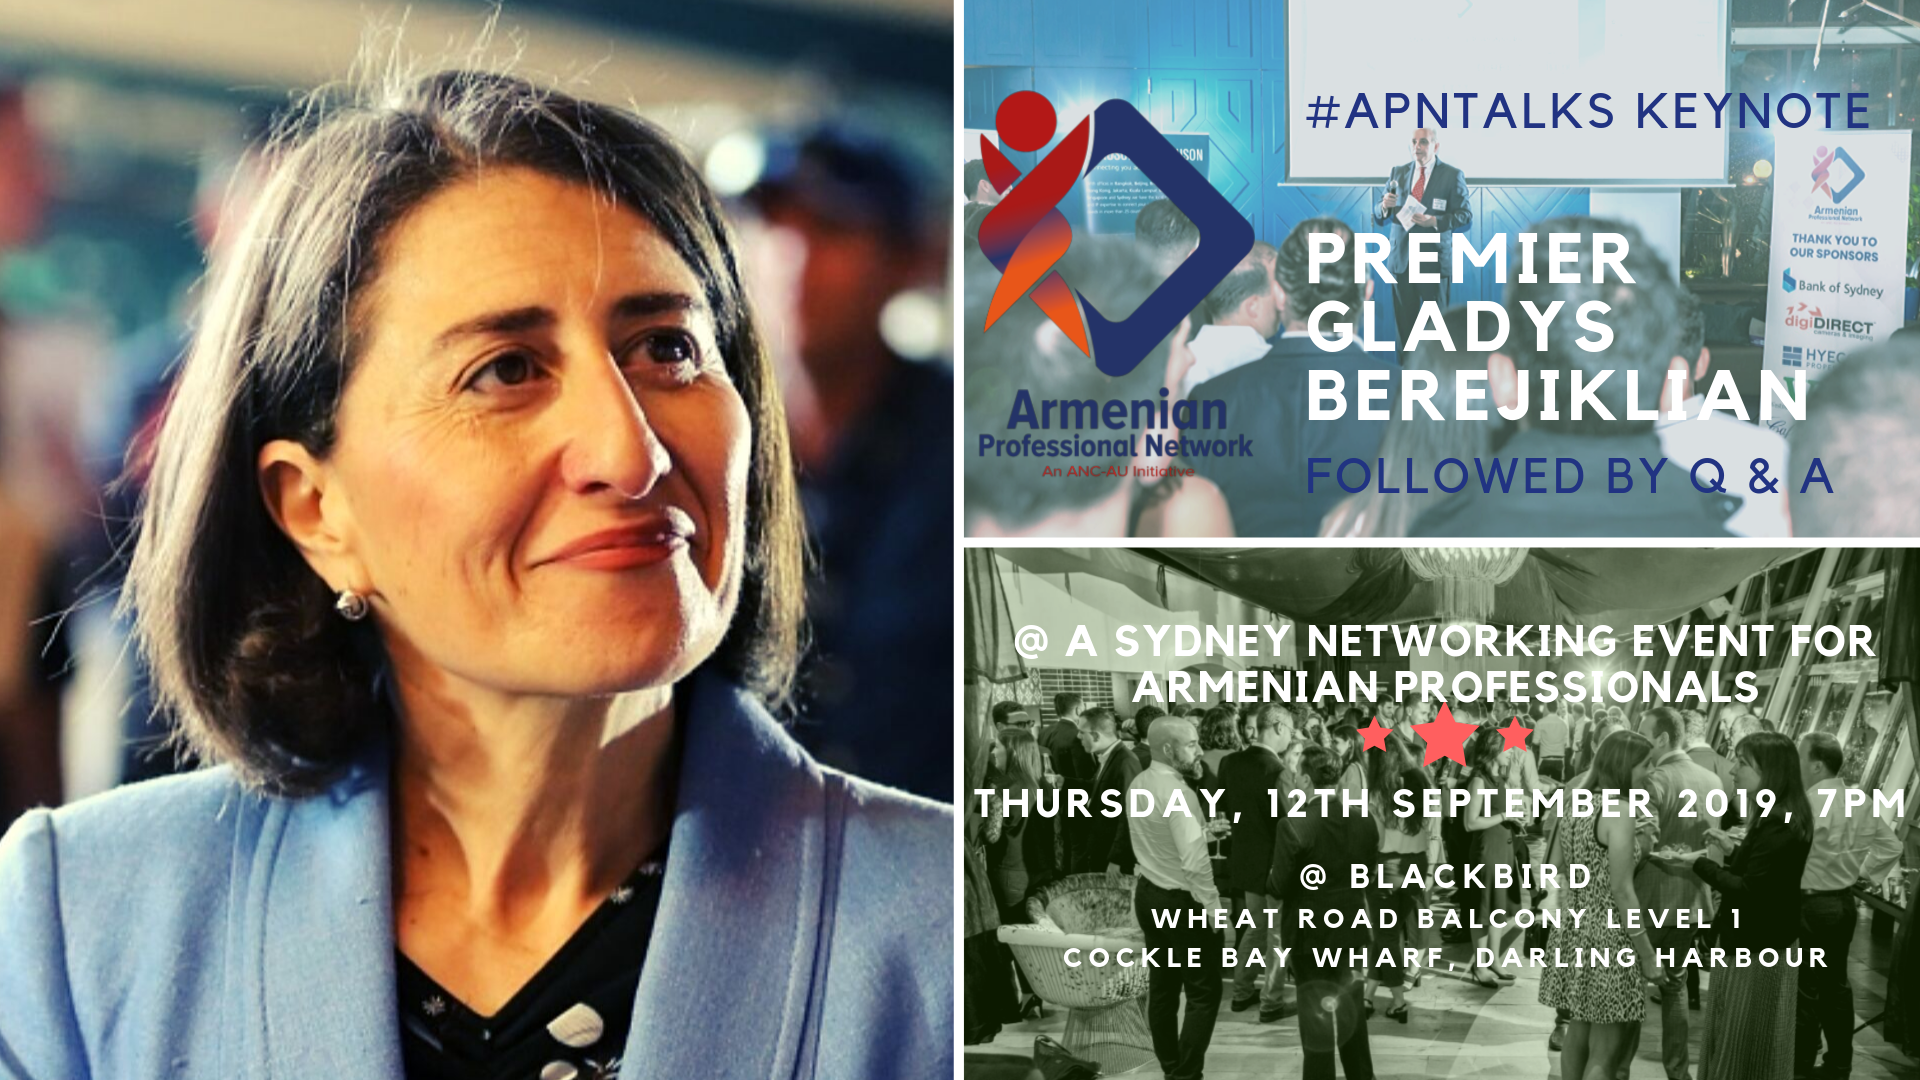 Premier Gladys Berejiklian to Keynote Sydney Networking Event Organised by Armenian Professional Network